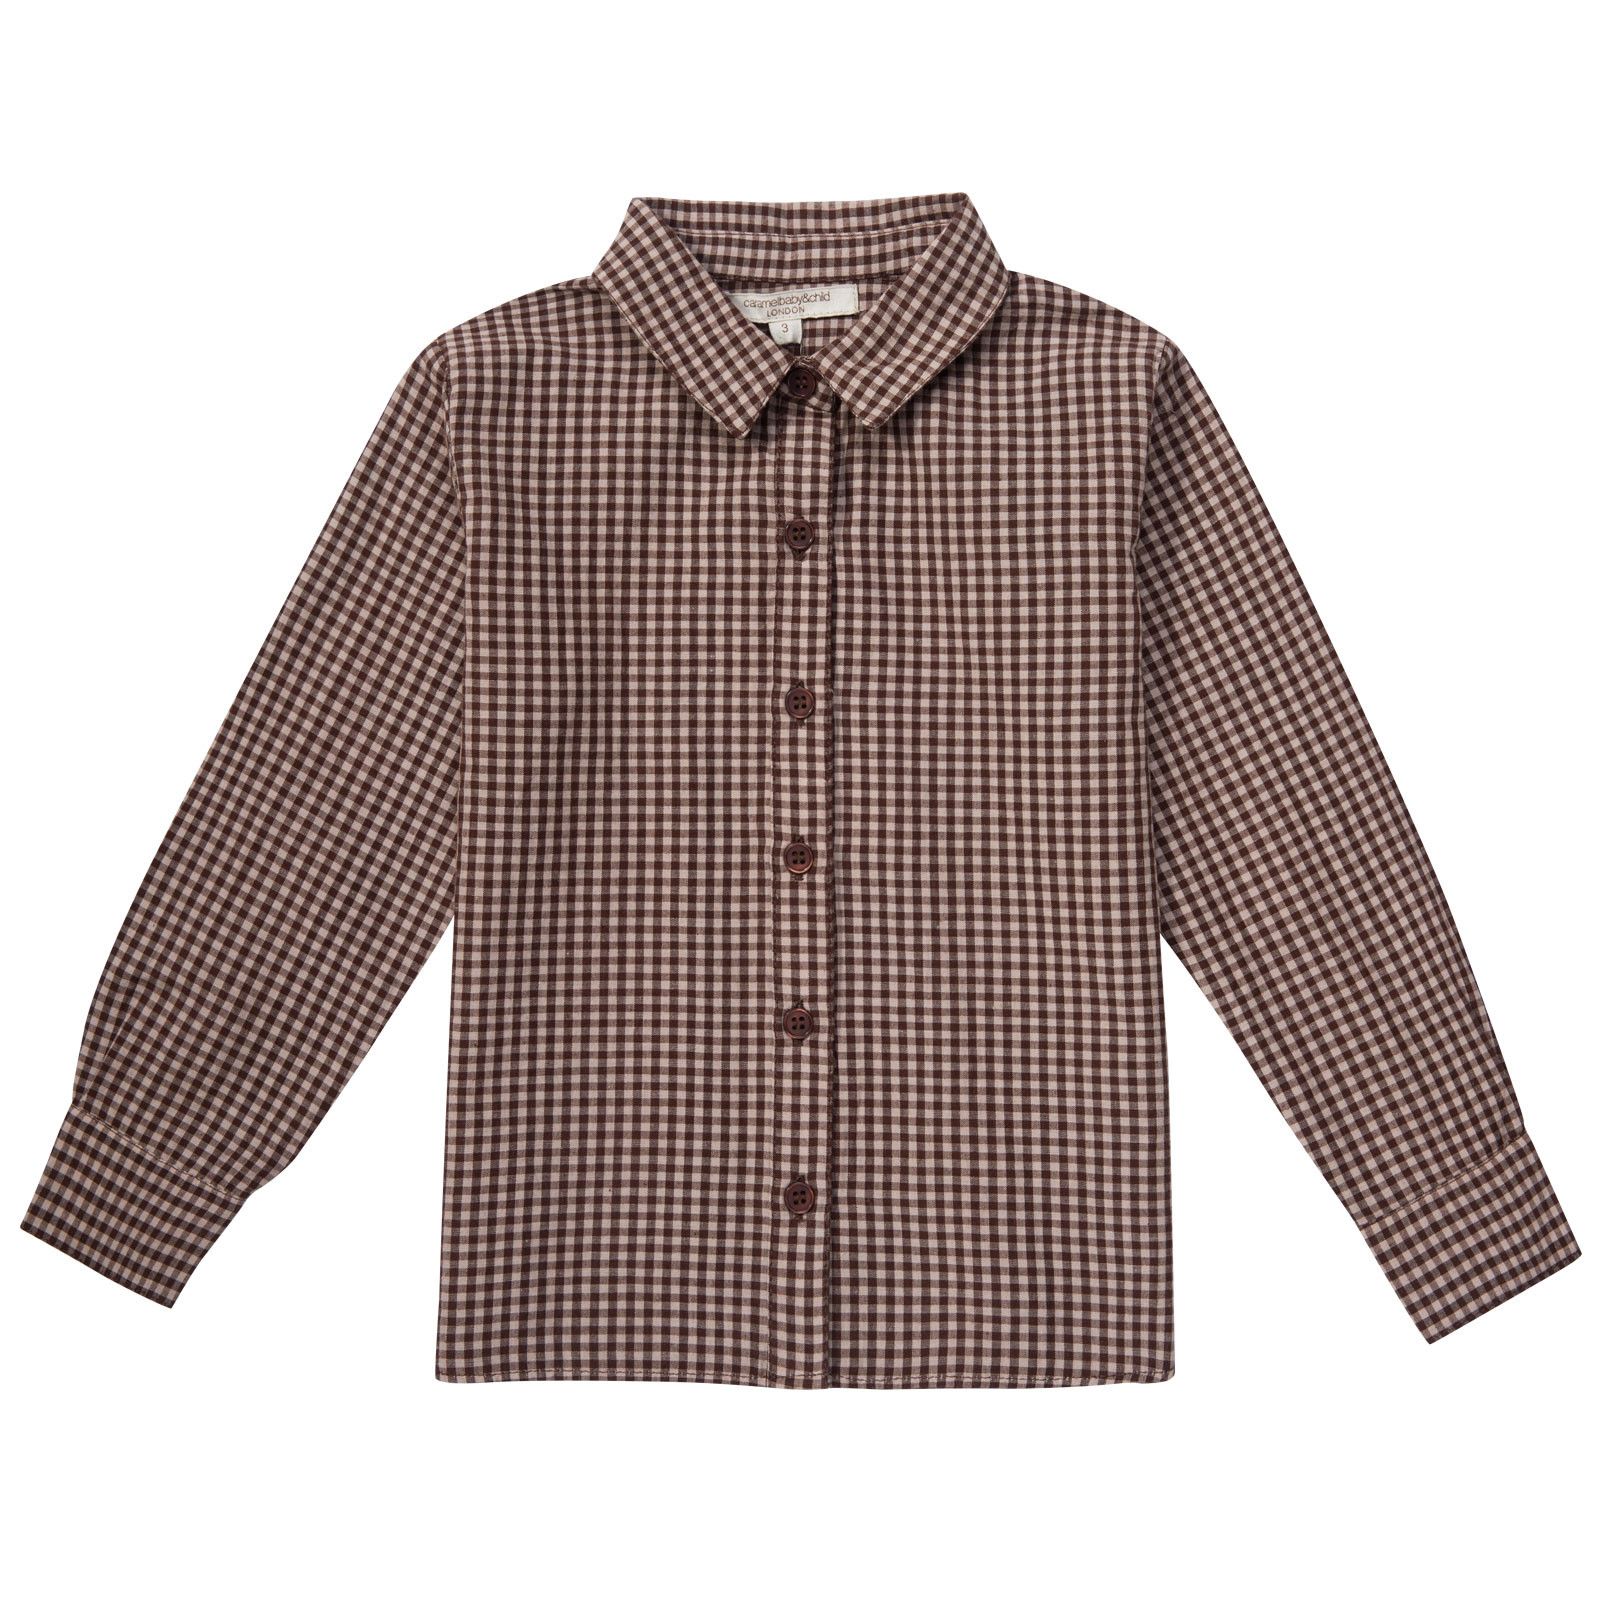 Boys Brown Gingham Cotton Shirt - CÉMAROSE | Children's Fashion Store - 1